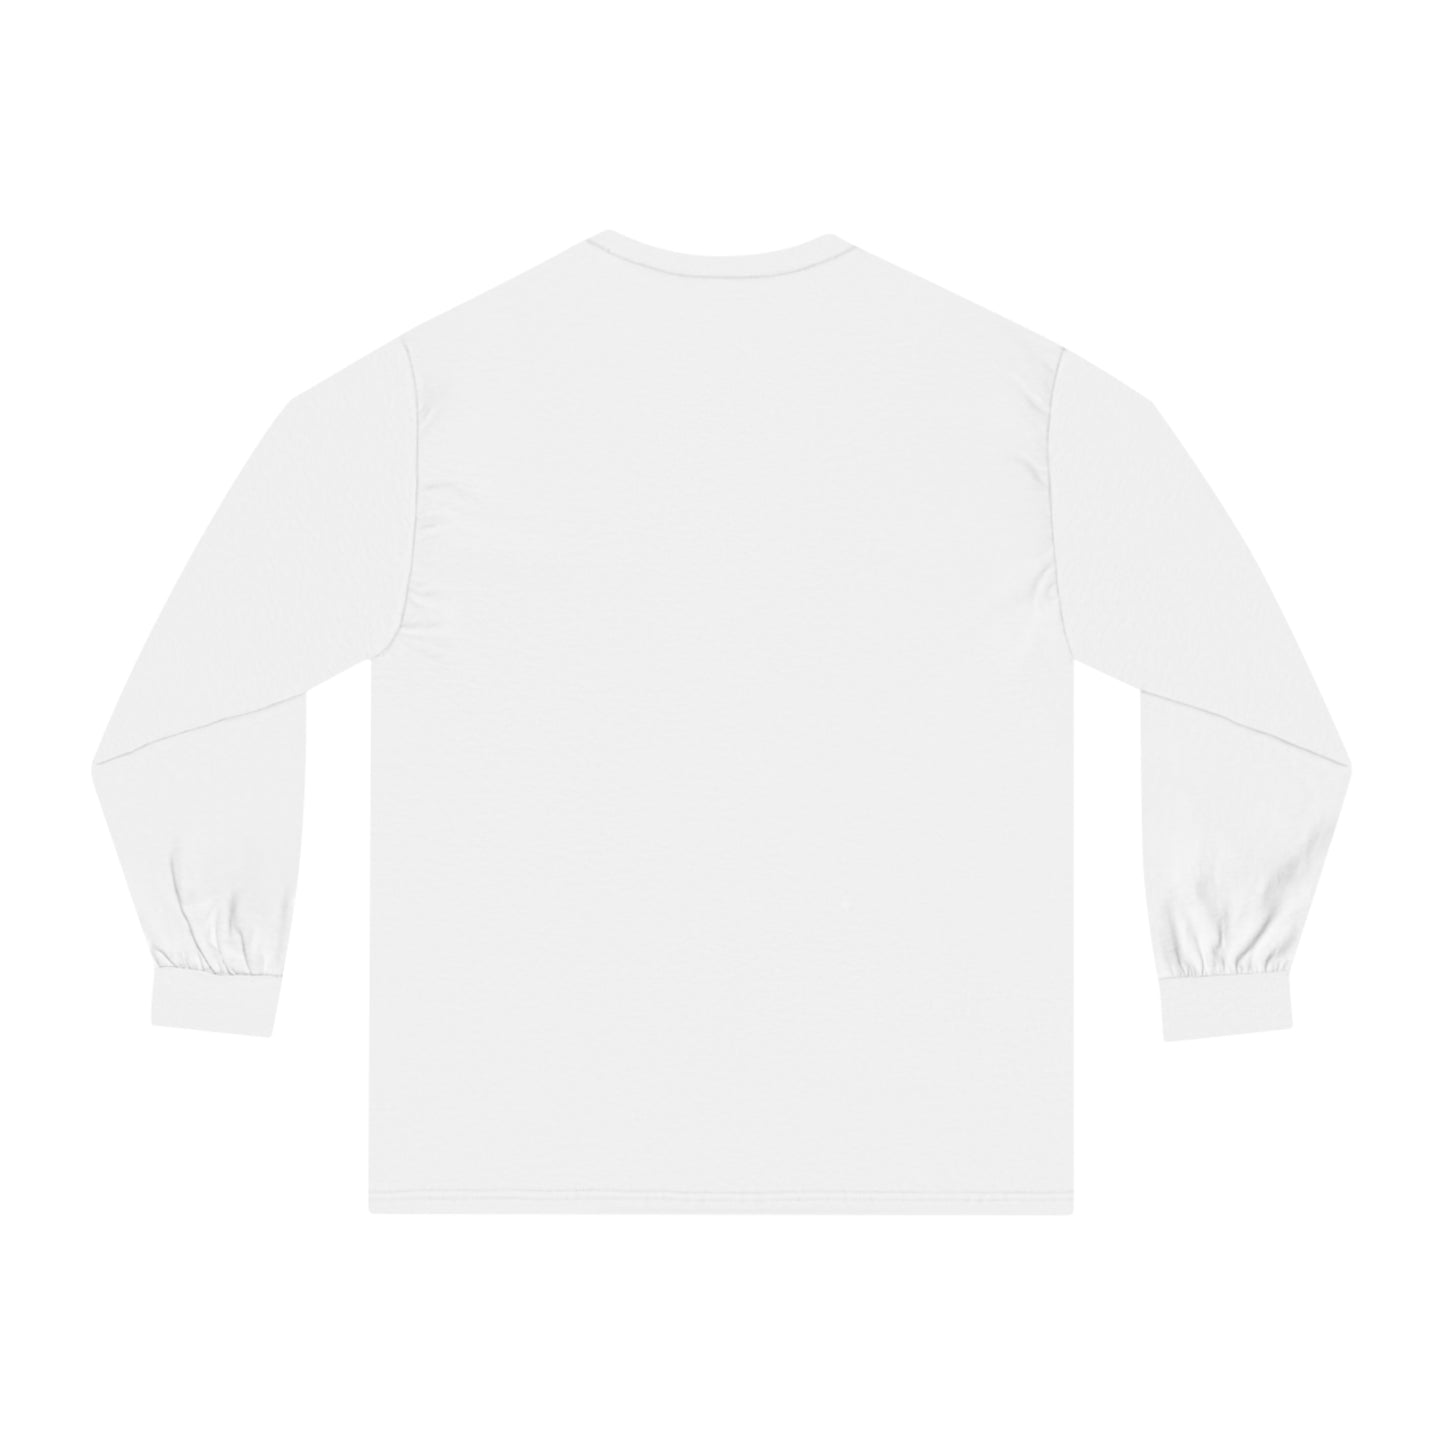 Soccer Cutout - American Apparel Unisex Classic Long Sleeve T-Shirt